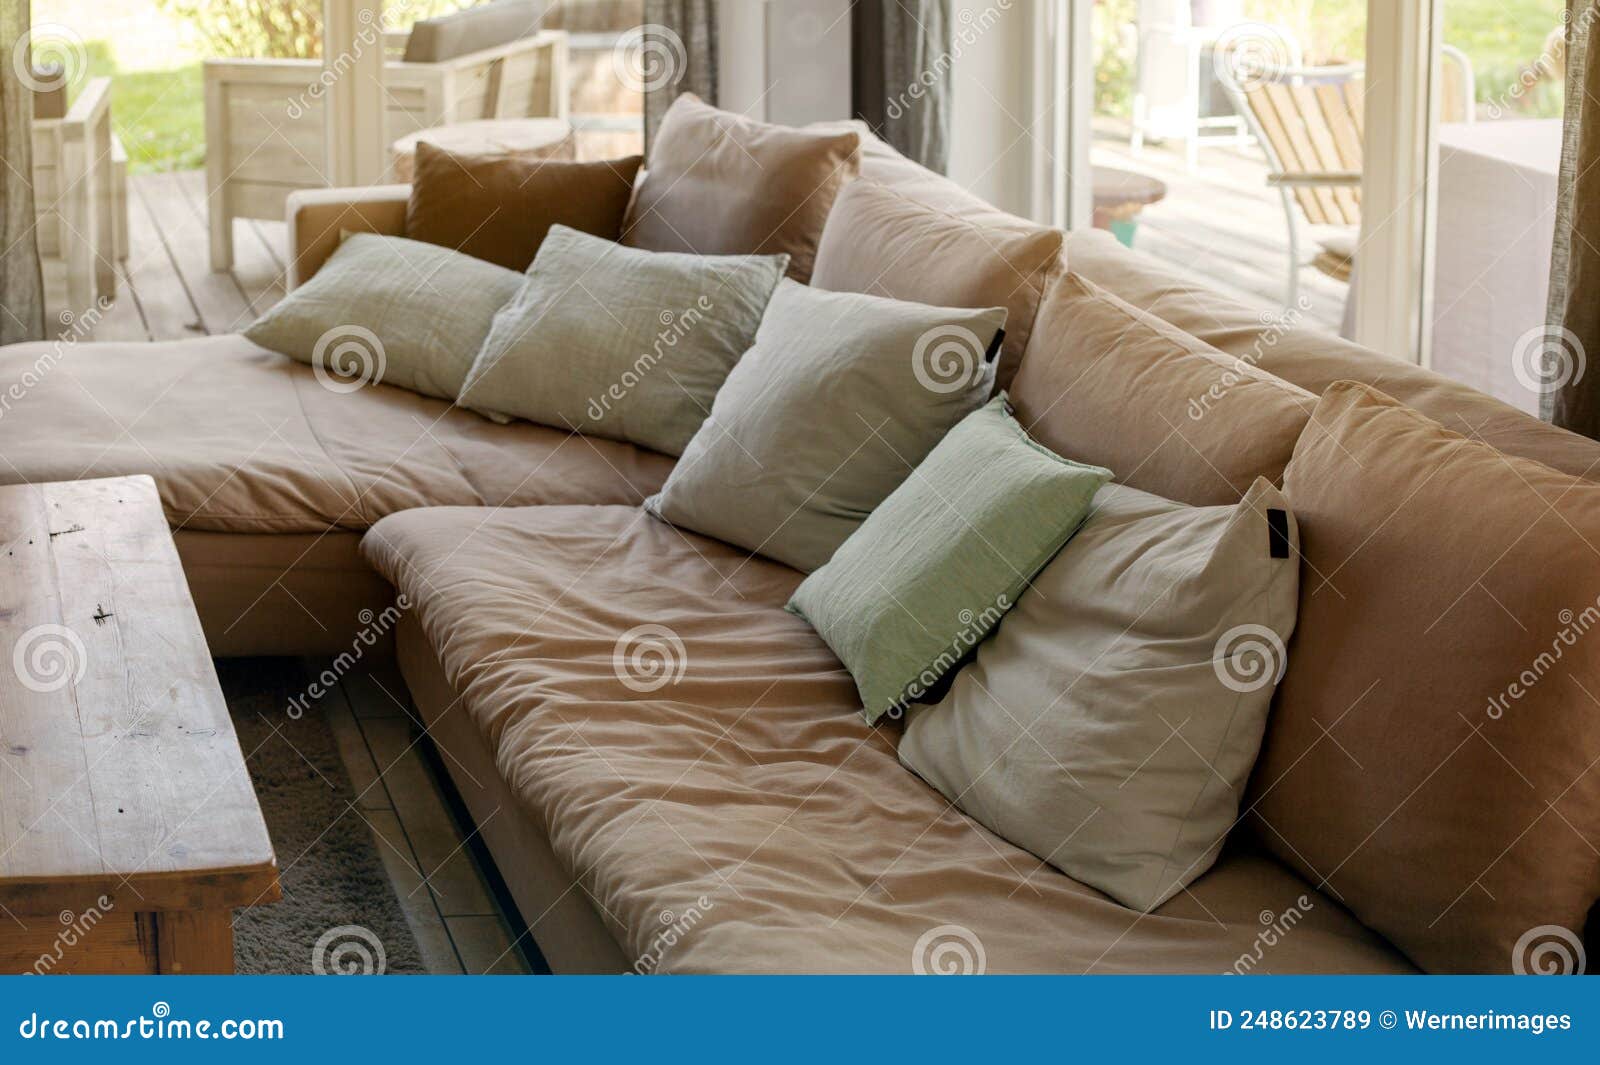 https://thumbs.dreamstime.com/z/big-sofa-lots-pillows-living-room-248623789.jpg